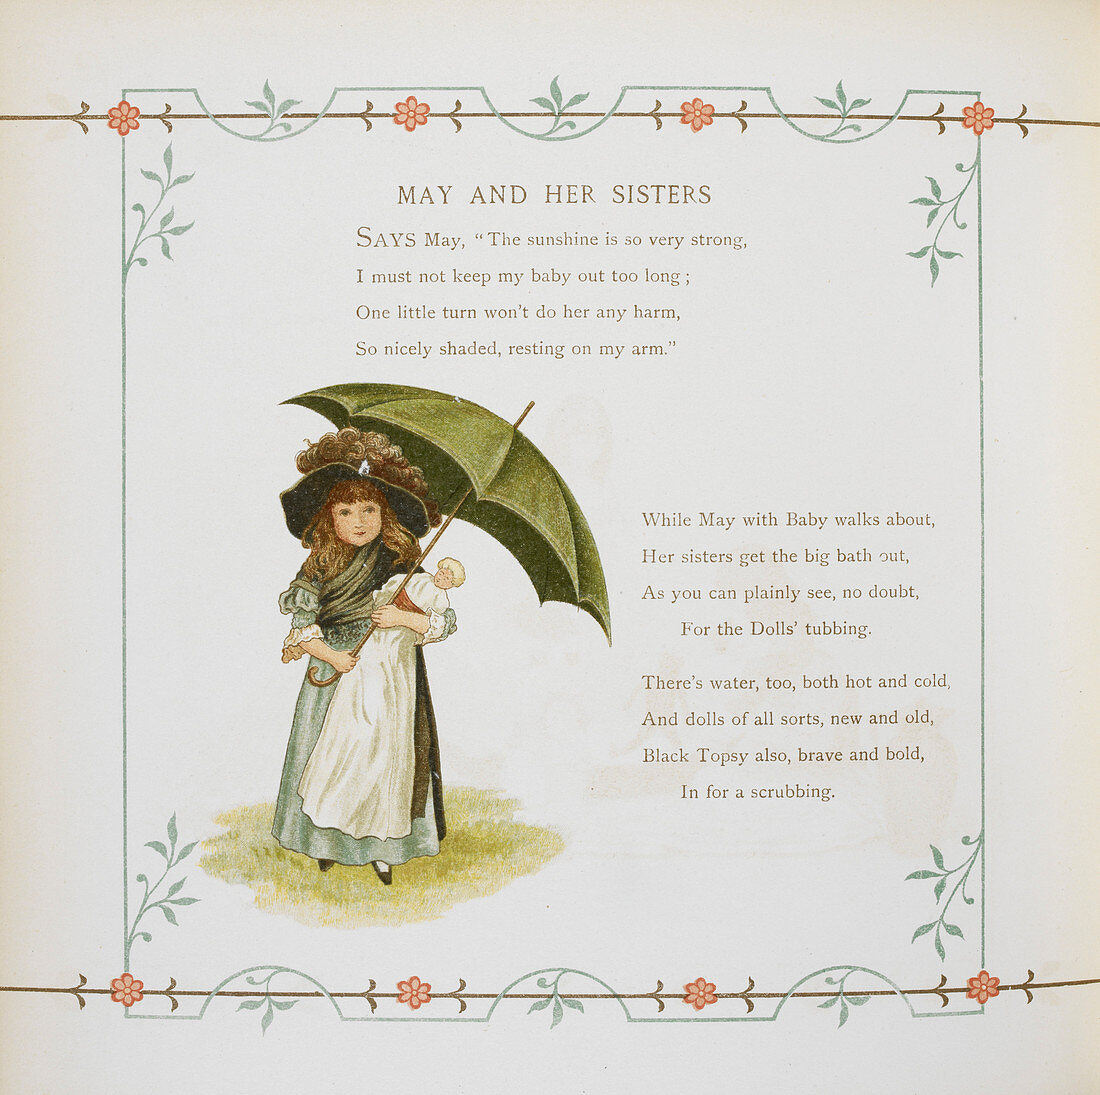 Young girl holding an umbrella